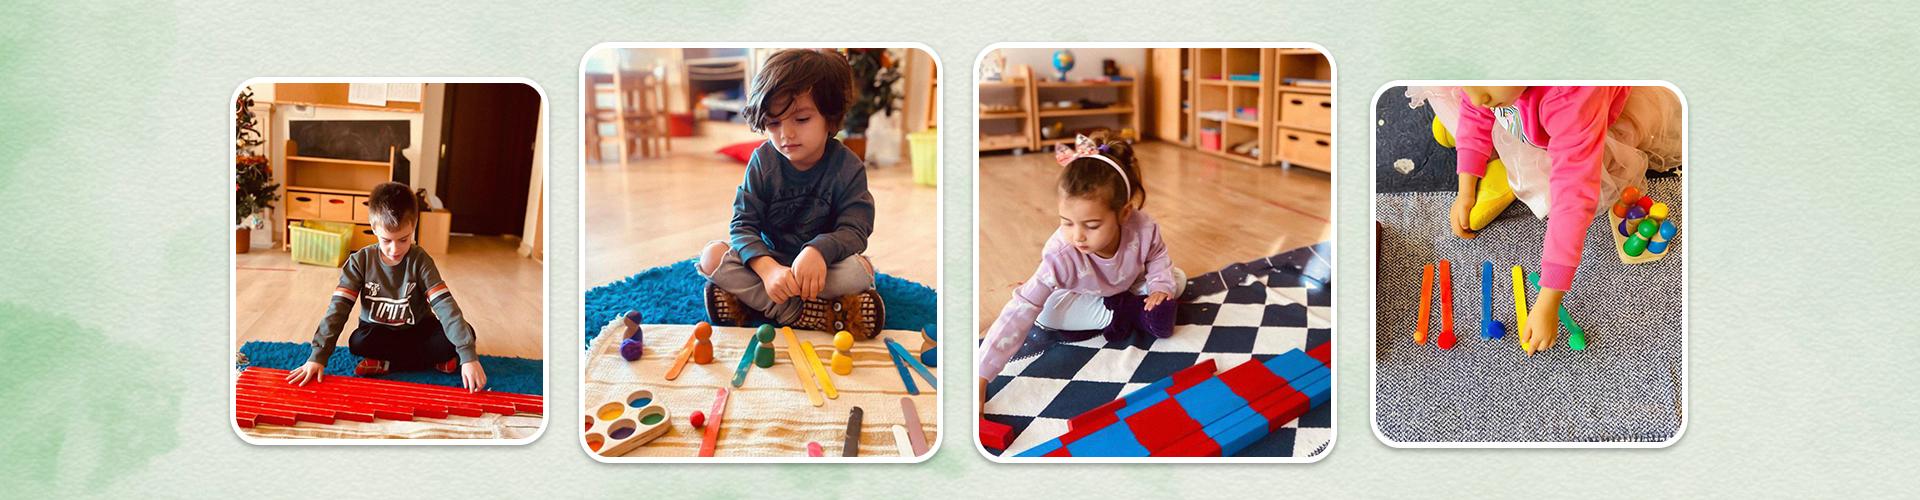 Montessori Metodu Nedir?